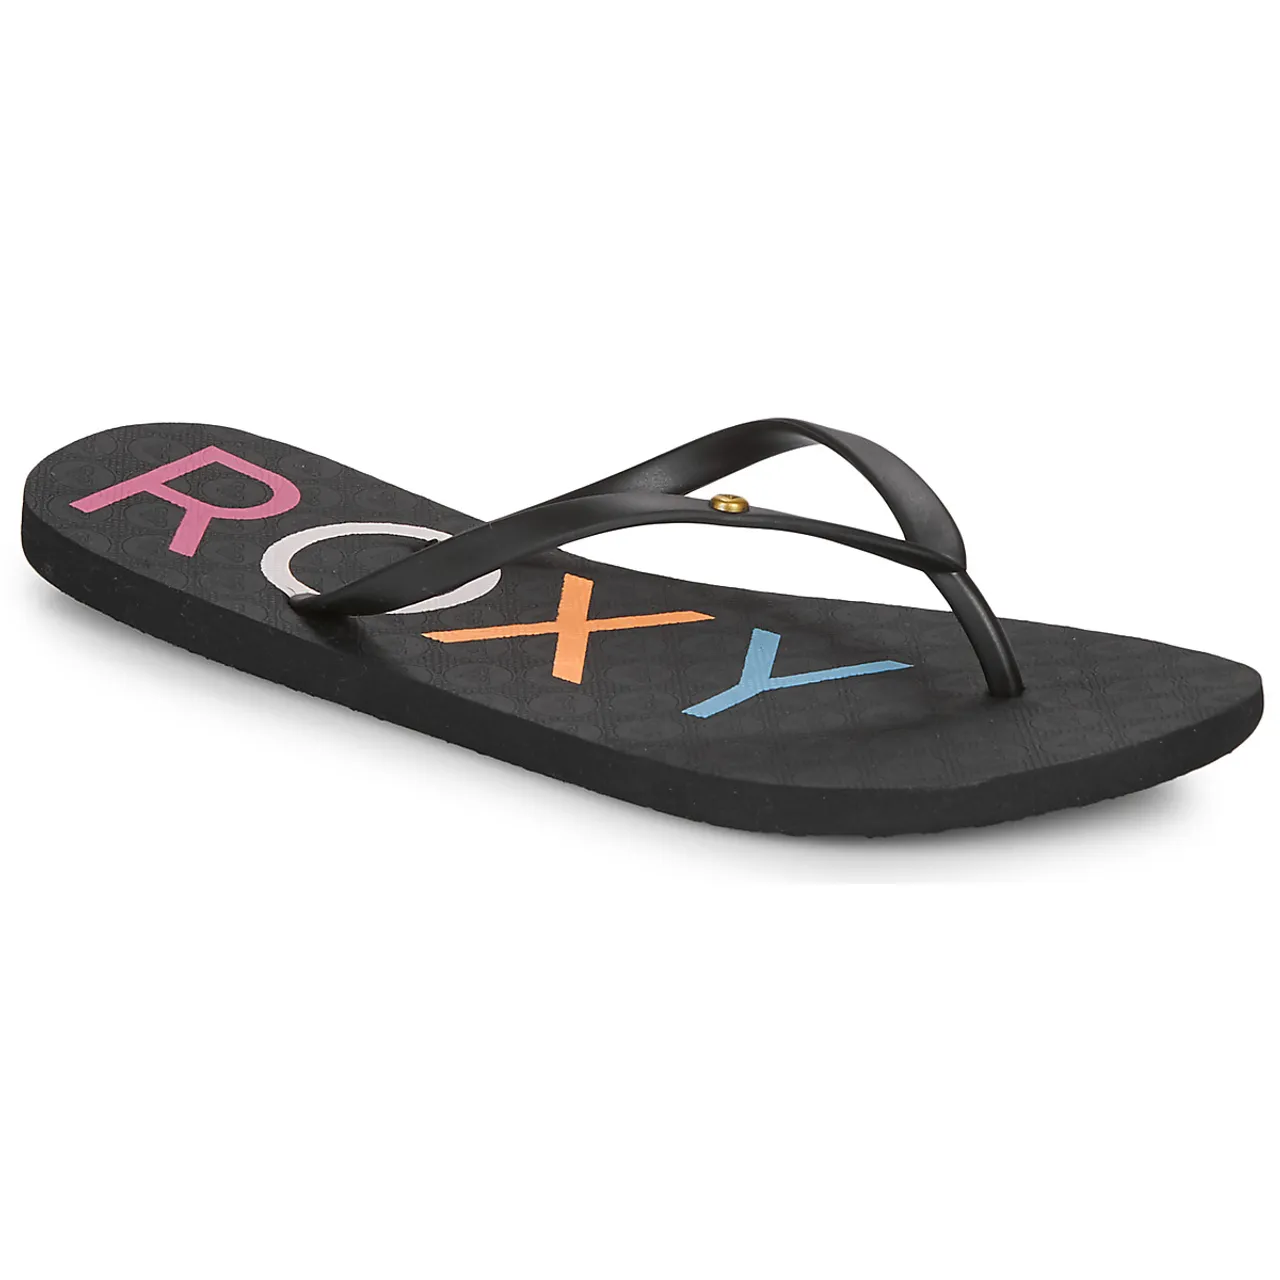 Roxy  SANDY III  women's Flip flops / Sandals (Shoes) in Black